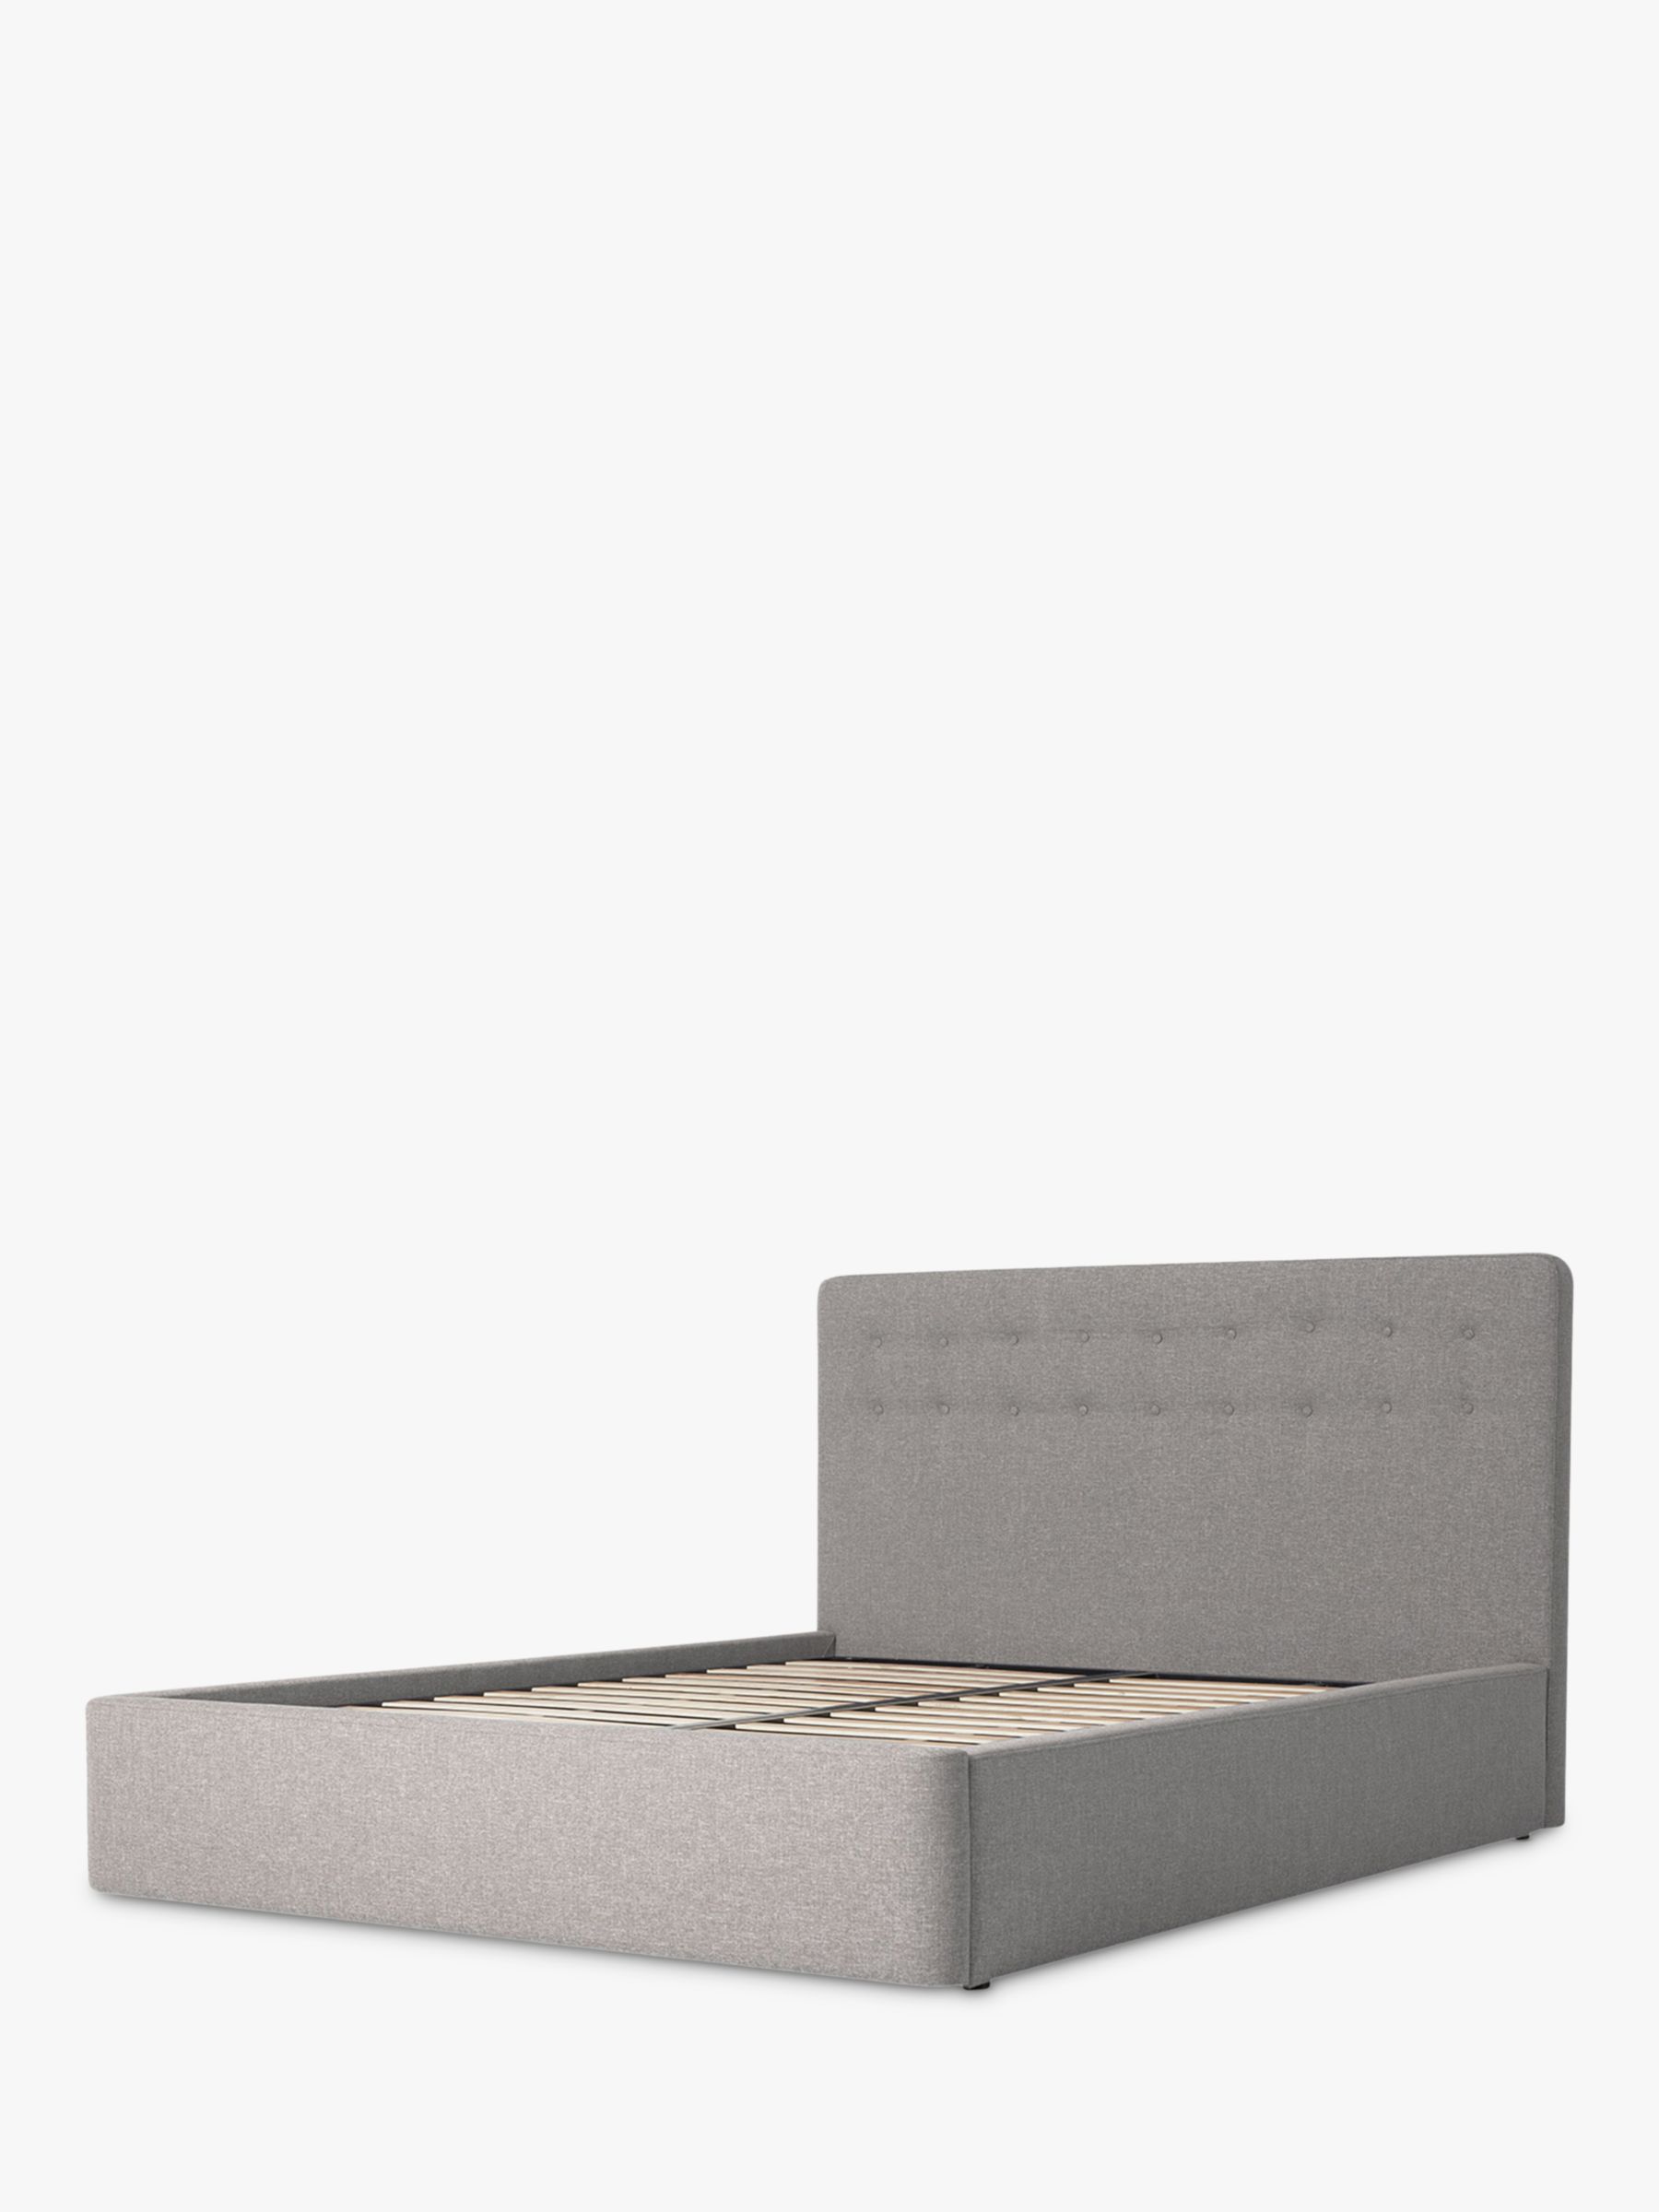 Swyft Bed 01 Upholstered Bed Frame, King Size